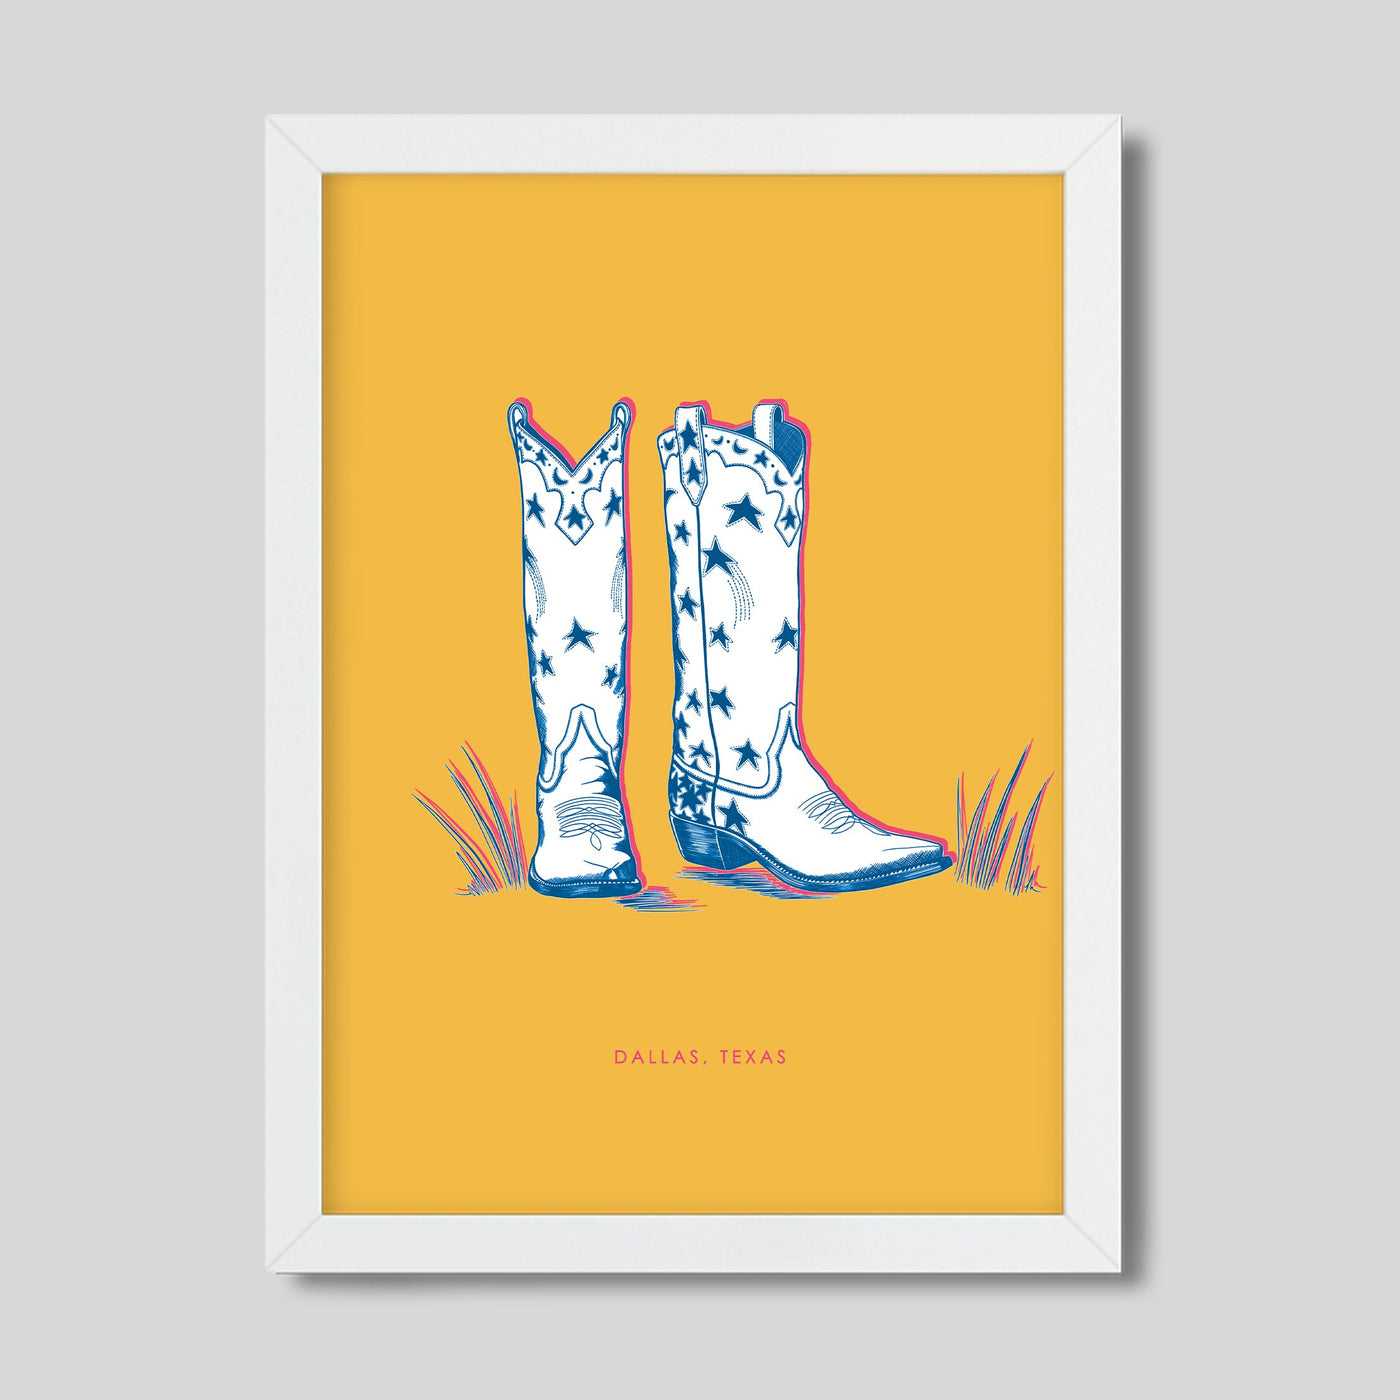 Gallery Prints Yellow / 8x10 / white frame Dallas Boots Gallery Print Katie Kime